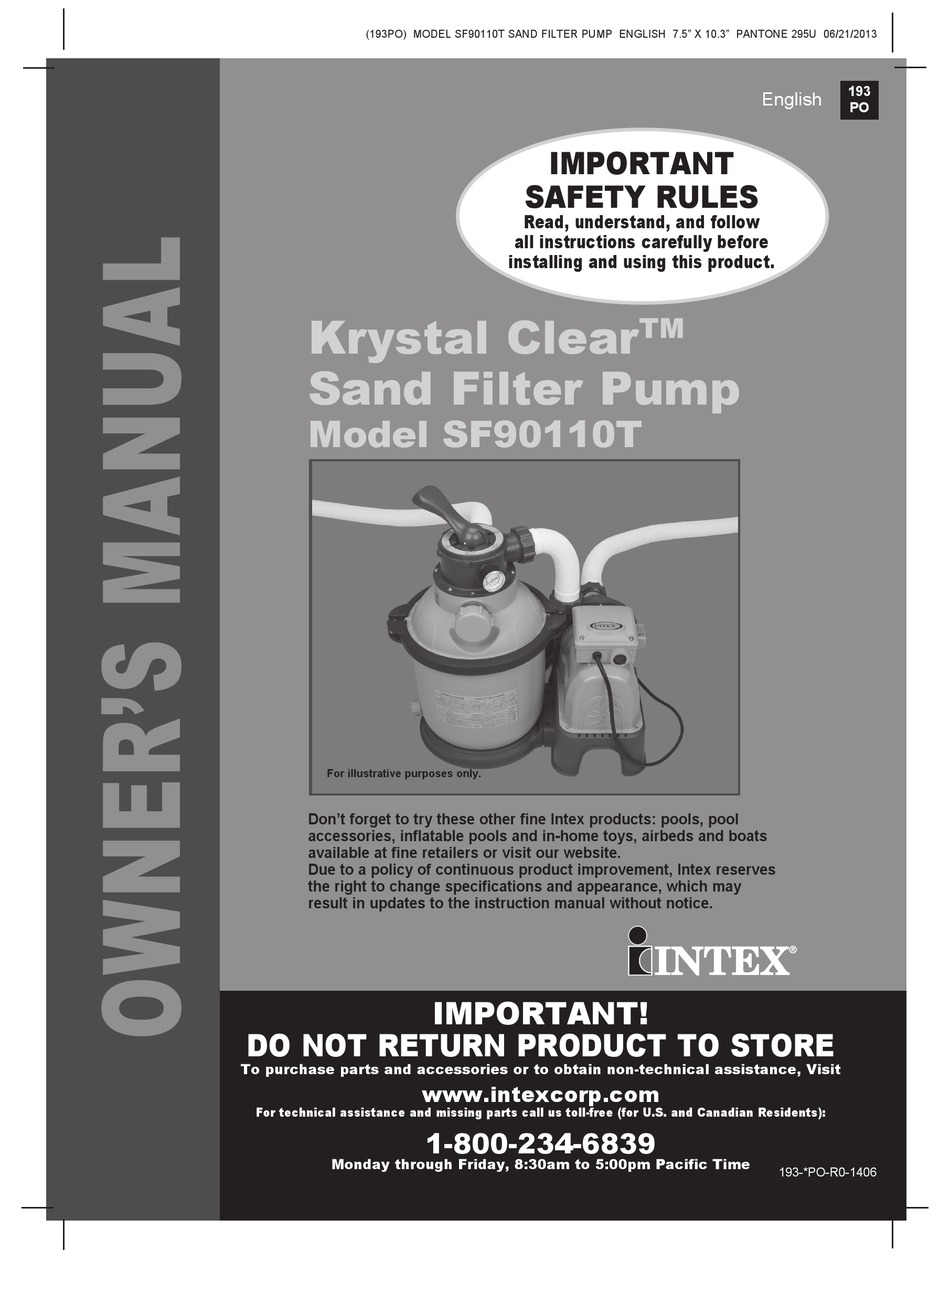 INTEX KRYSTAL CLEAR SF90110T OWNER'S MANUAL Pdf Download | ManualsLib